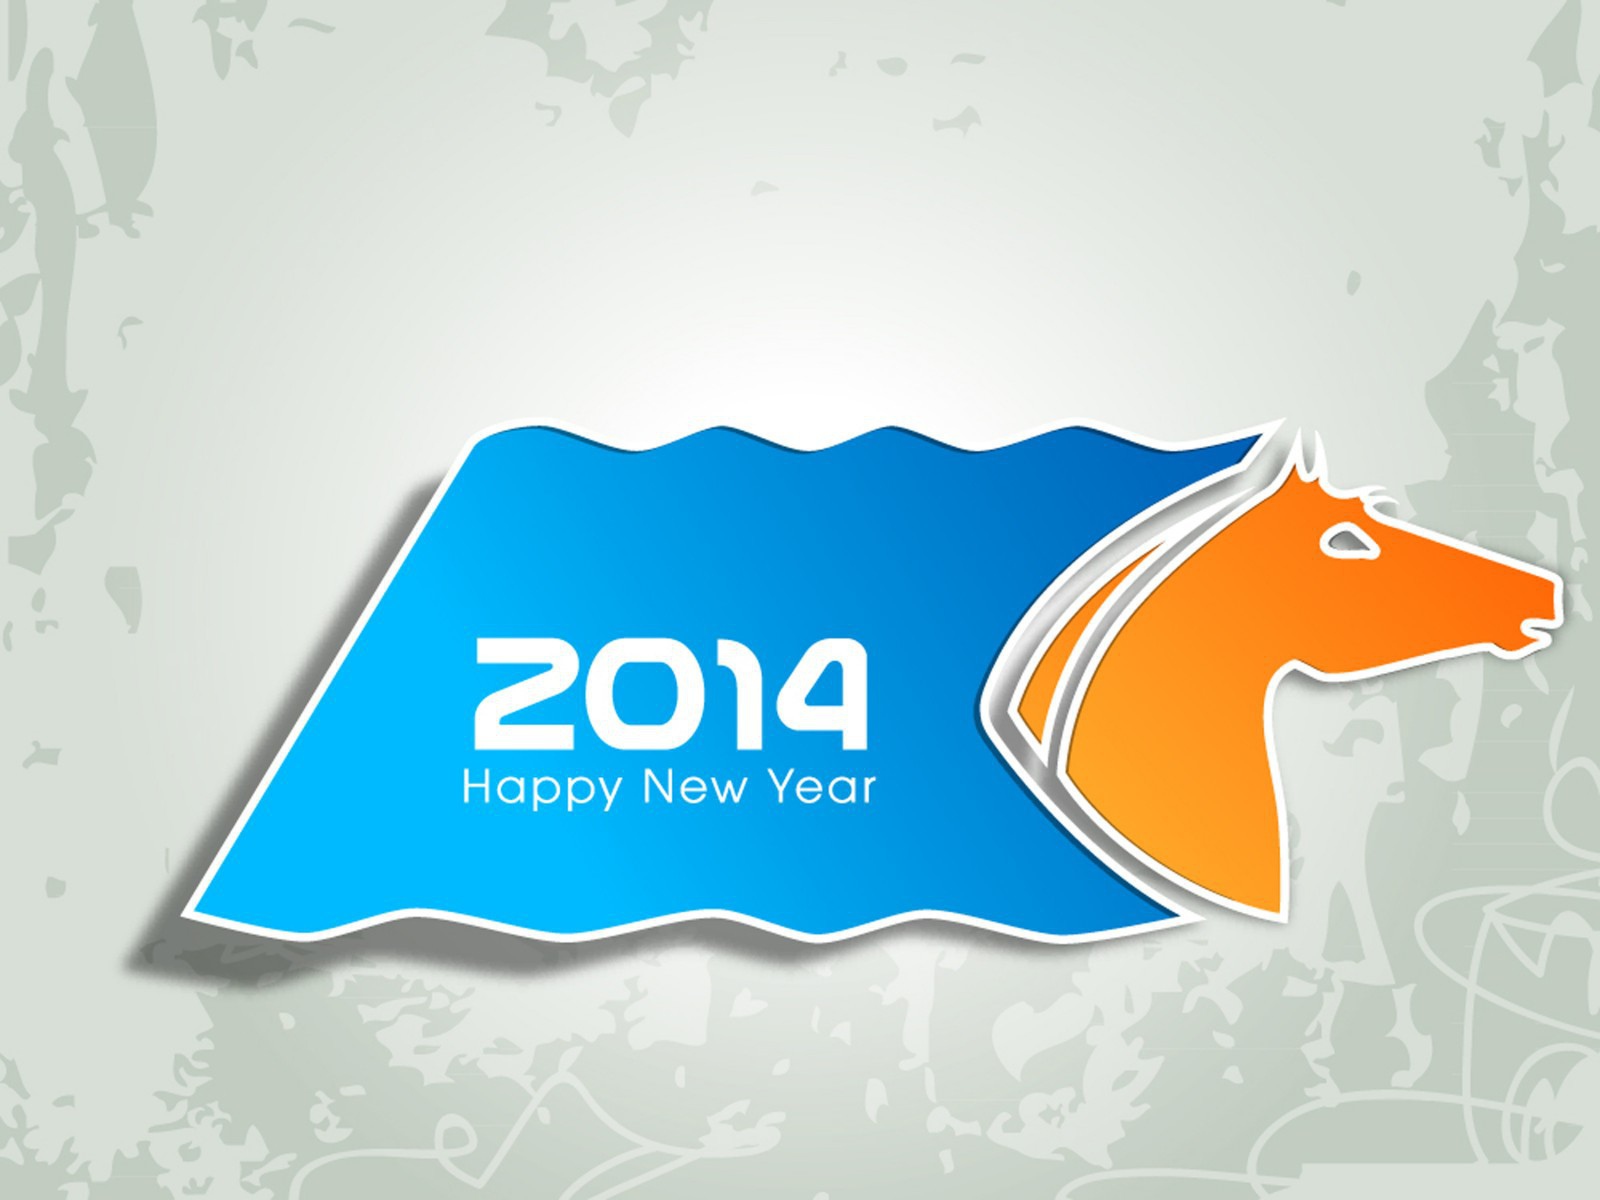 Happy New Year 2014 orange horse